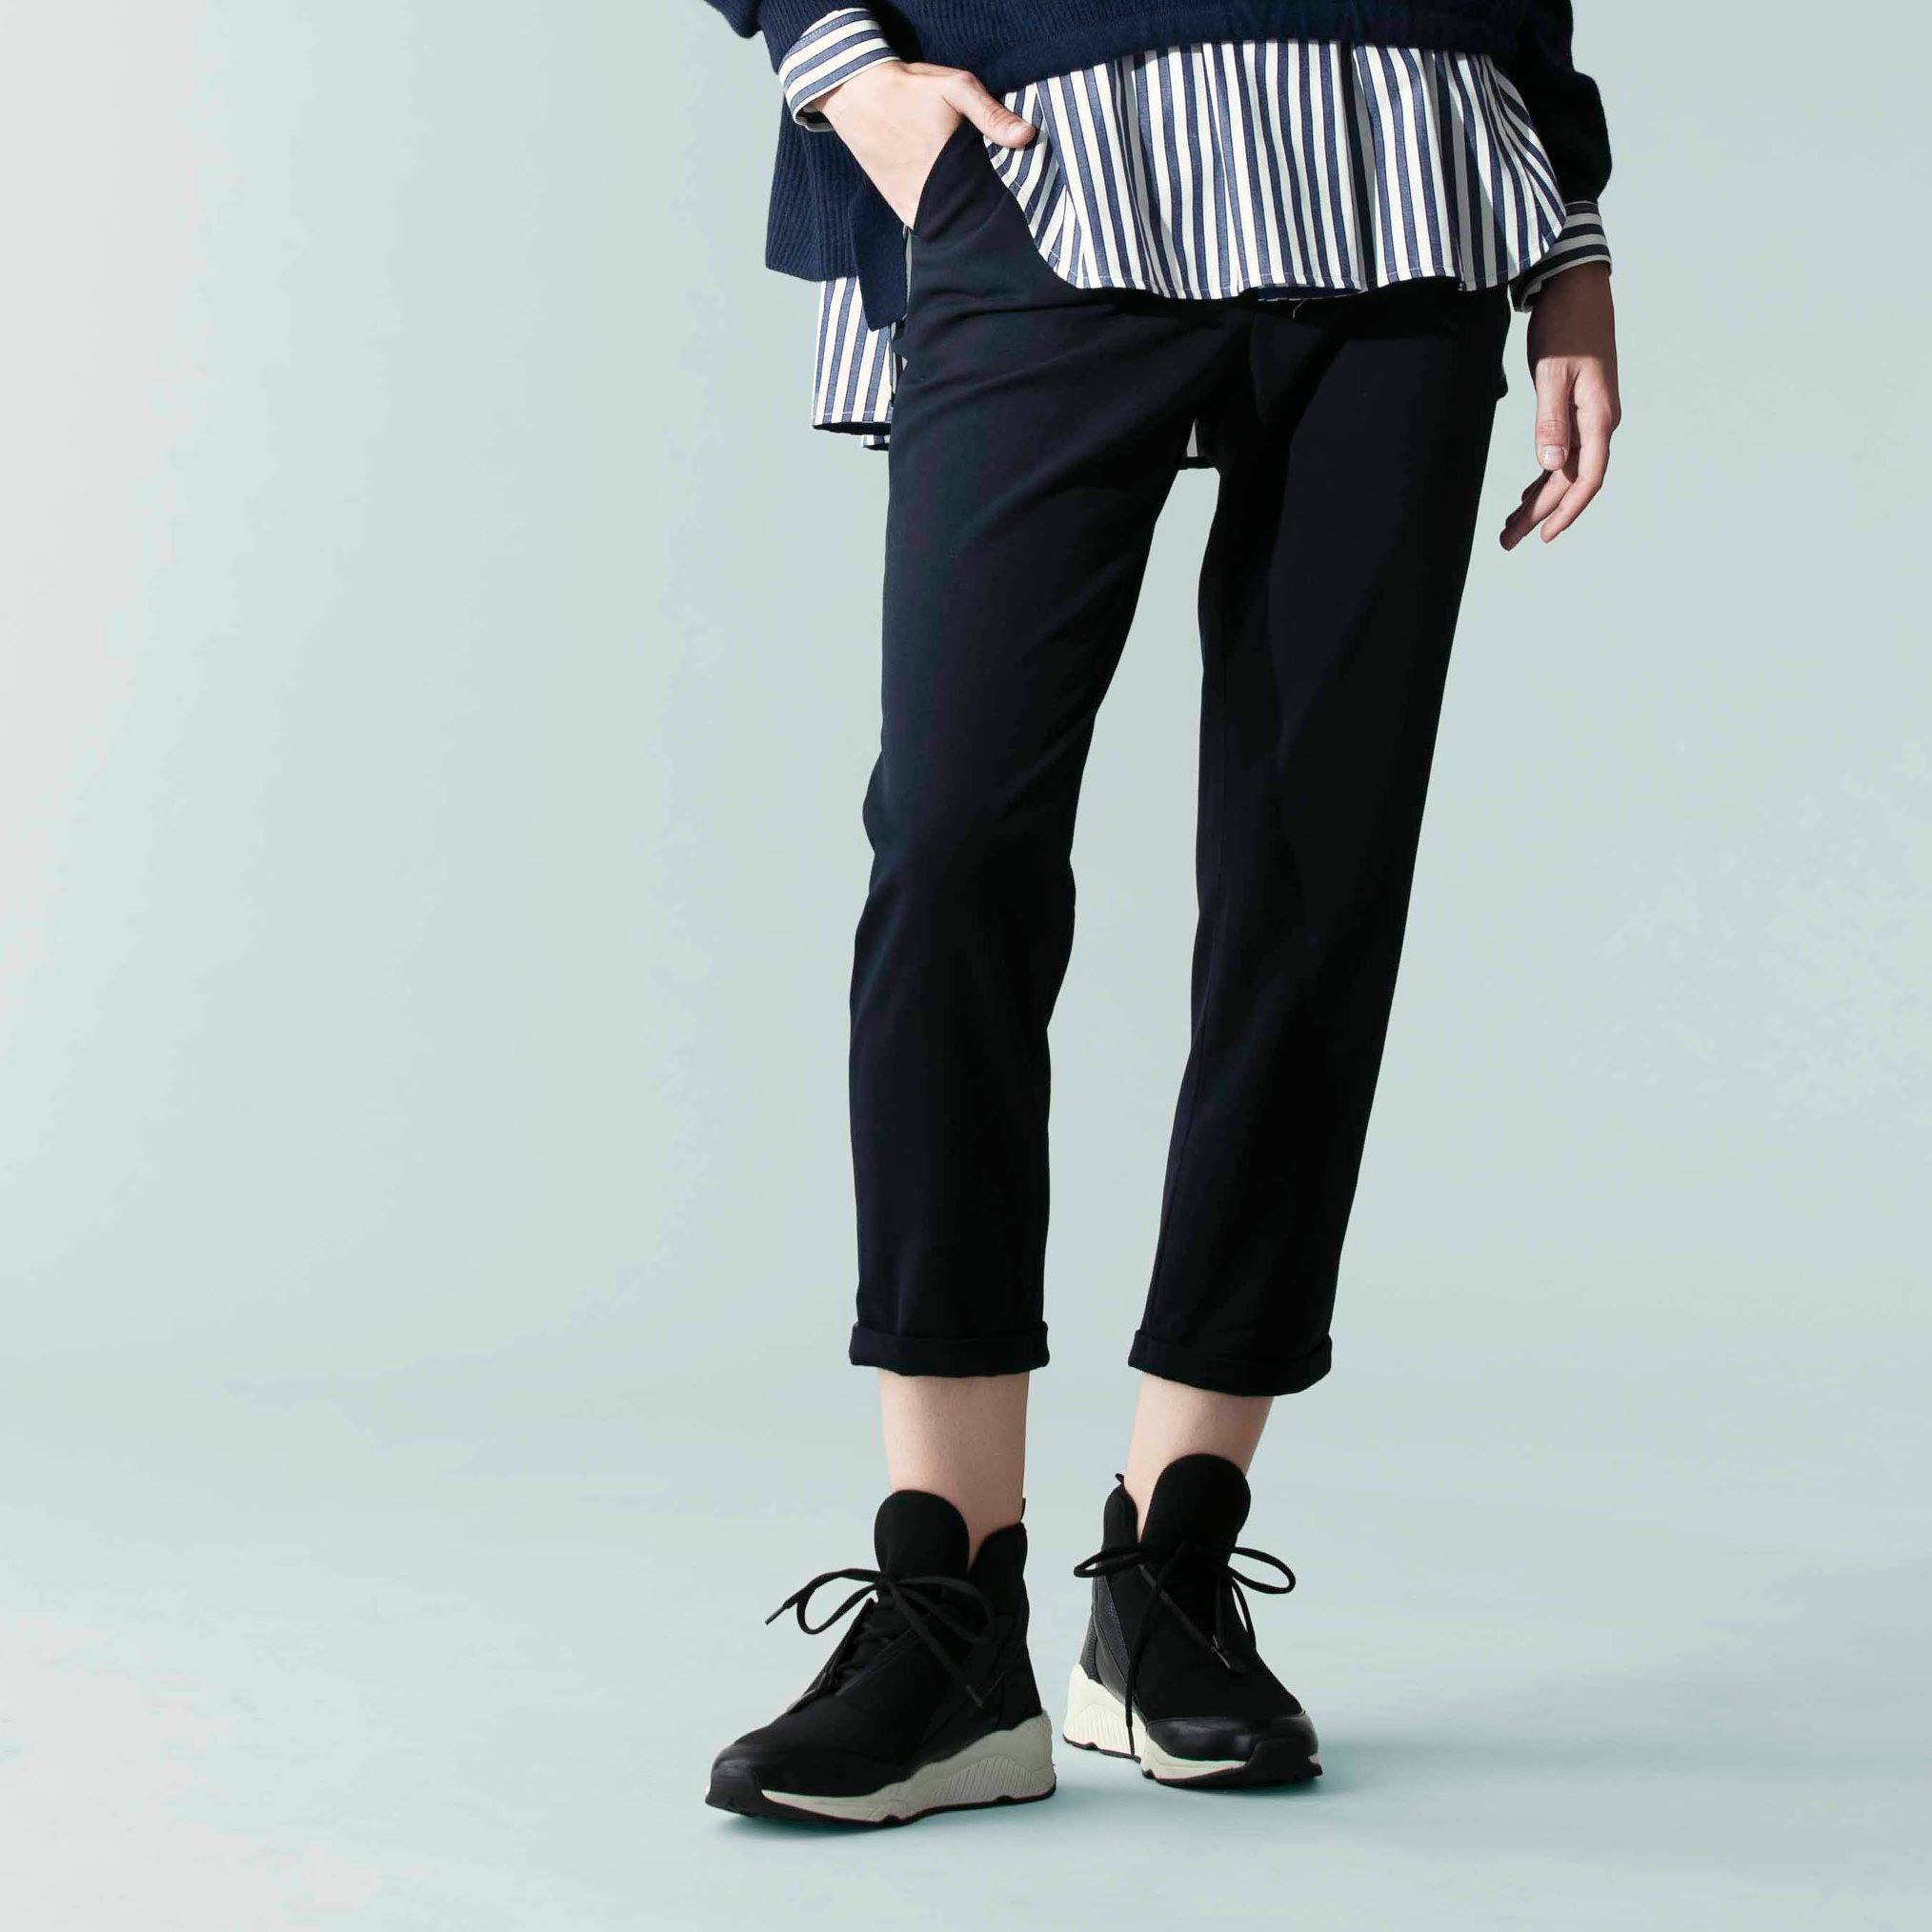 【Cozy Slim Fit Pants】Atsuro Tayama打破一般窄身單品的不適及焗促感，採用特別的物料及剪裁技巧，呈獻富彈性且顯瘦的長褲，讓您打造時尚與舒適兼備的個性造型。 更多Atsuro Tayama單品在Sidefame網店發售﹕